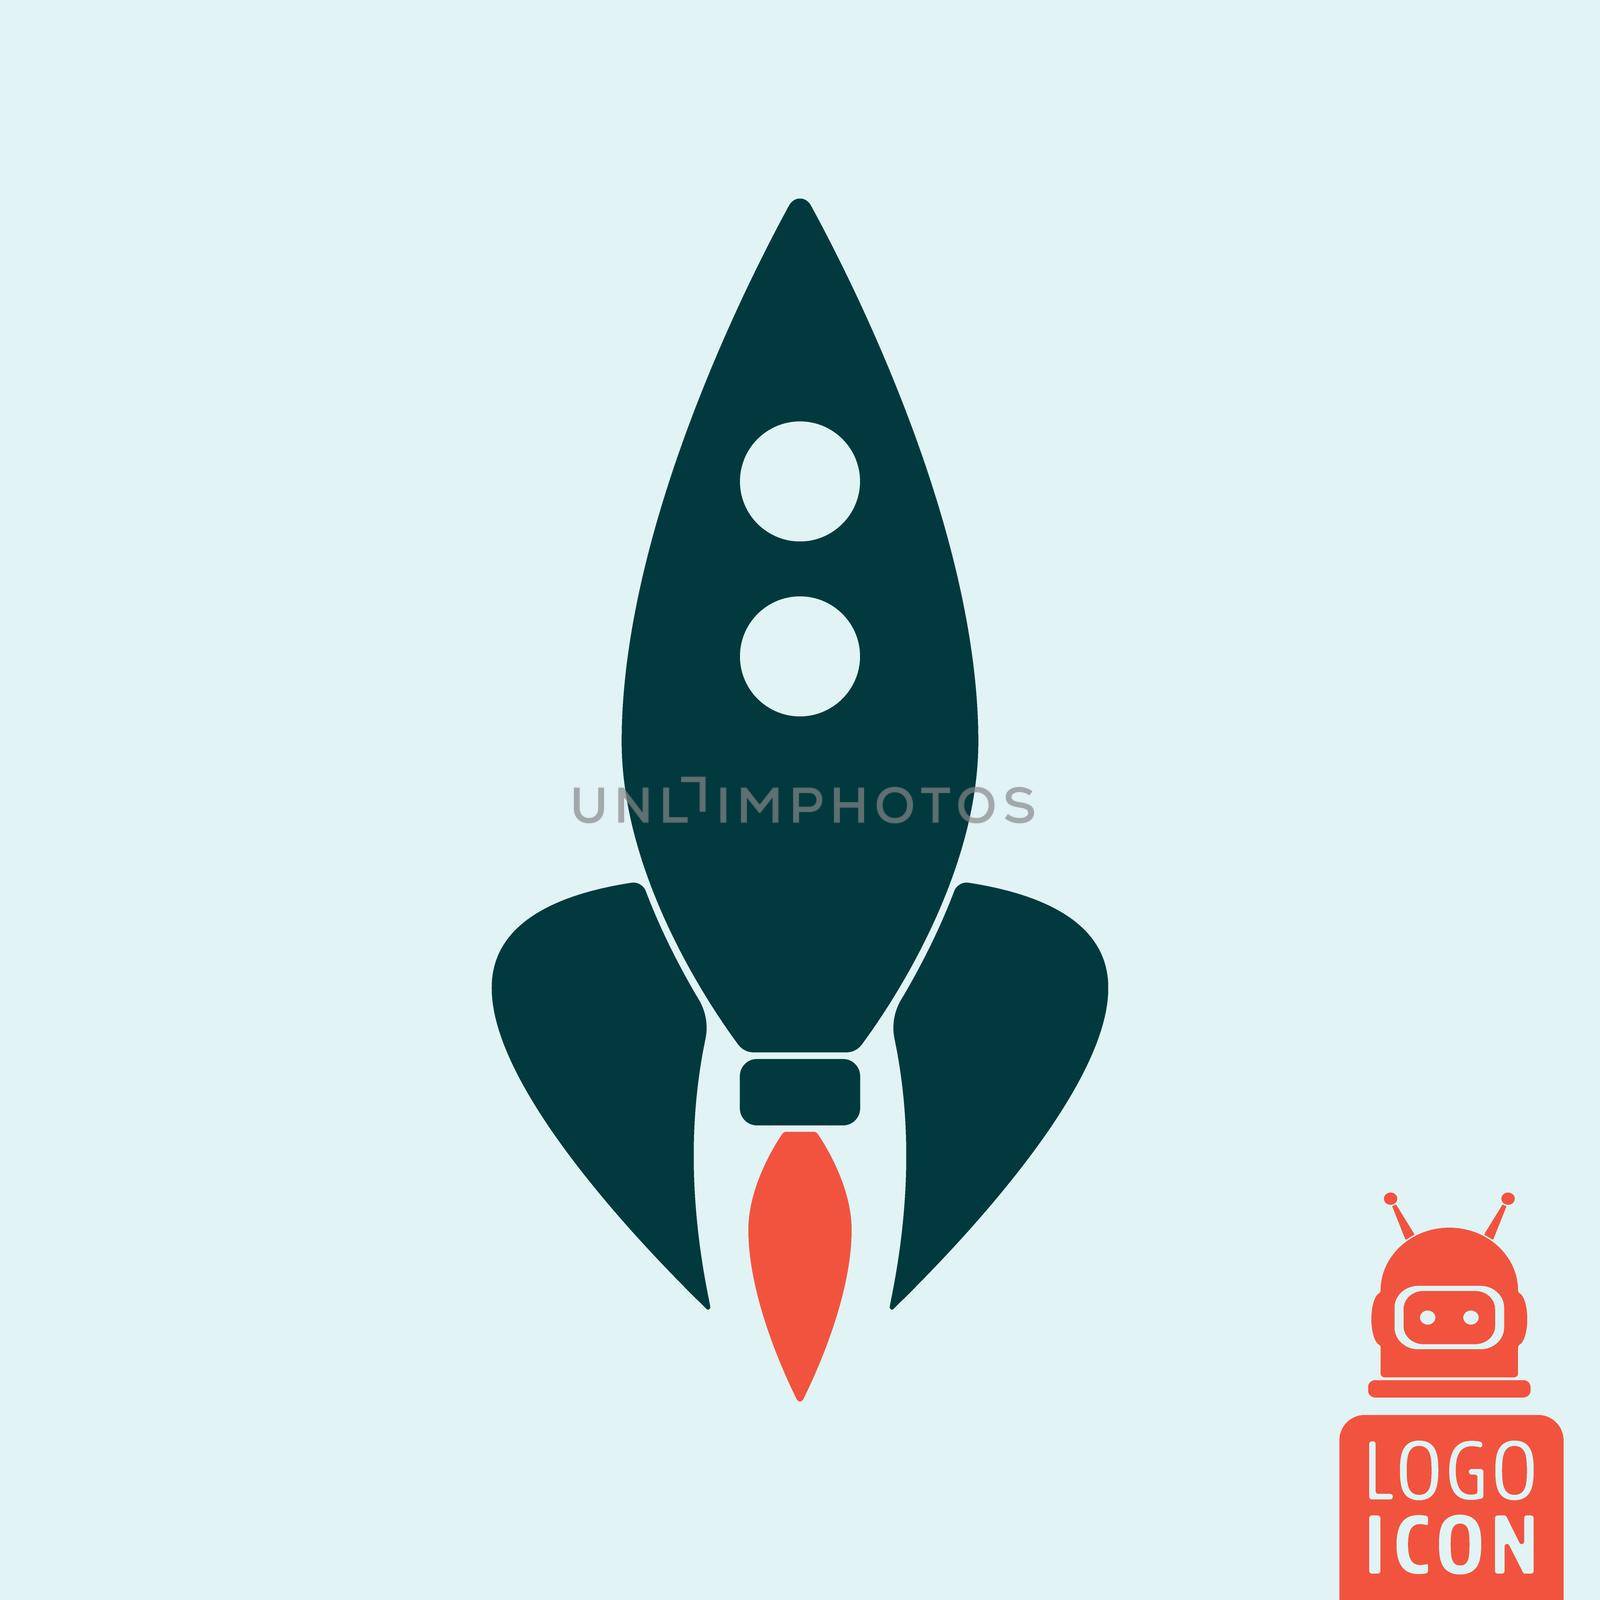 Rocket astronaut icon by Bobnevv